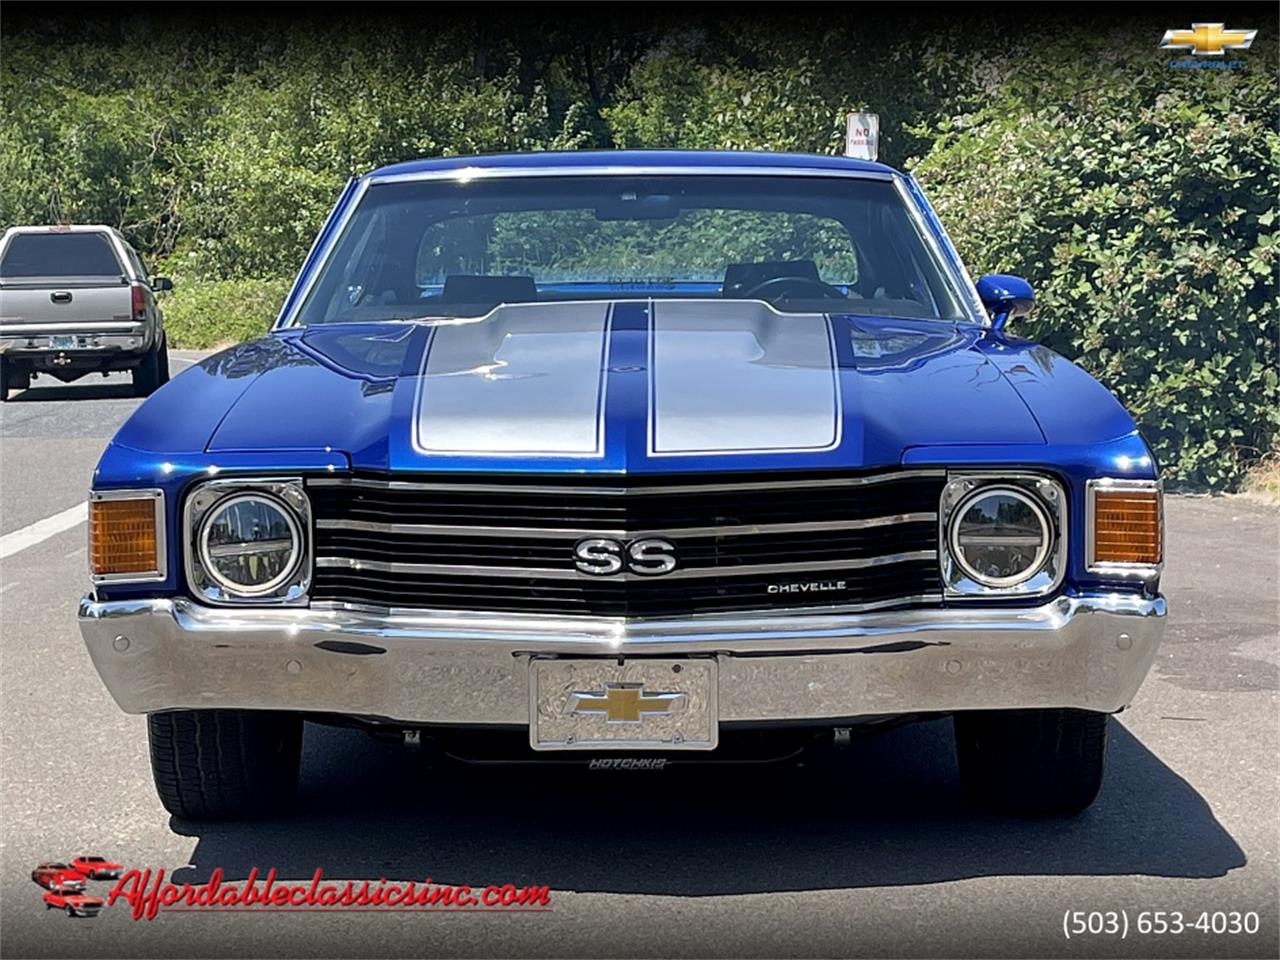 For Sale: 1972 Chevrolet Chevelle in Gladstone, Oregon for sale in Gladstone, OR